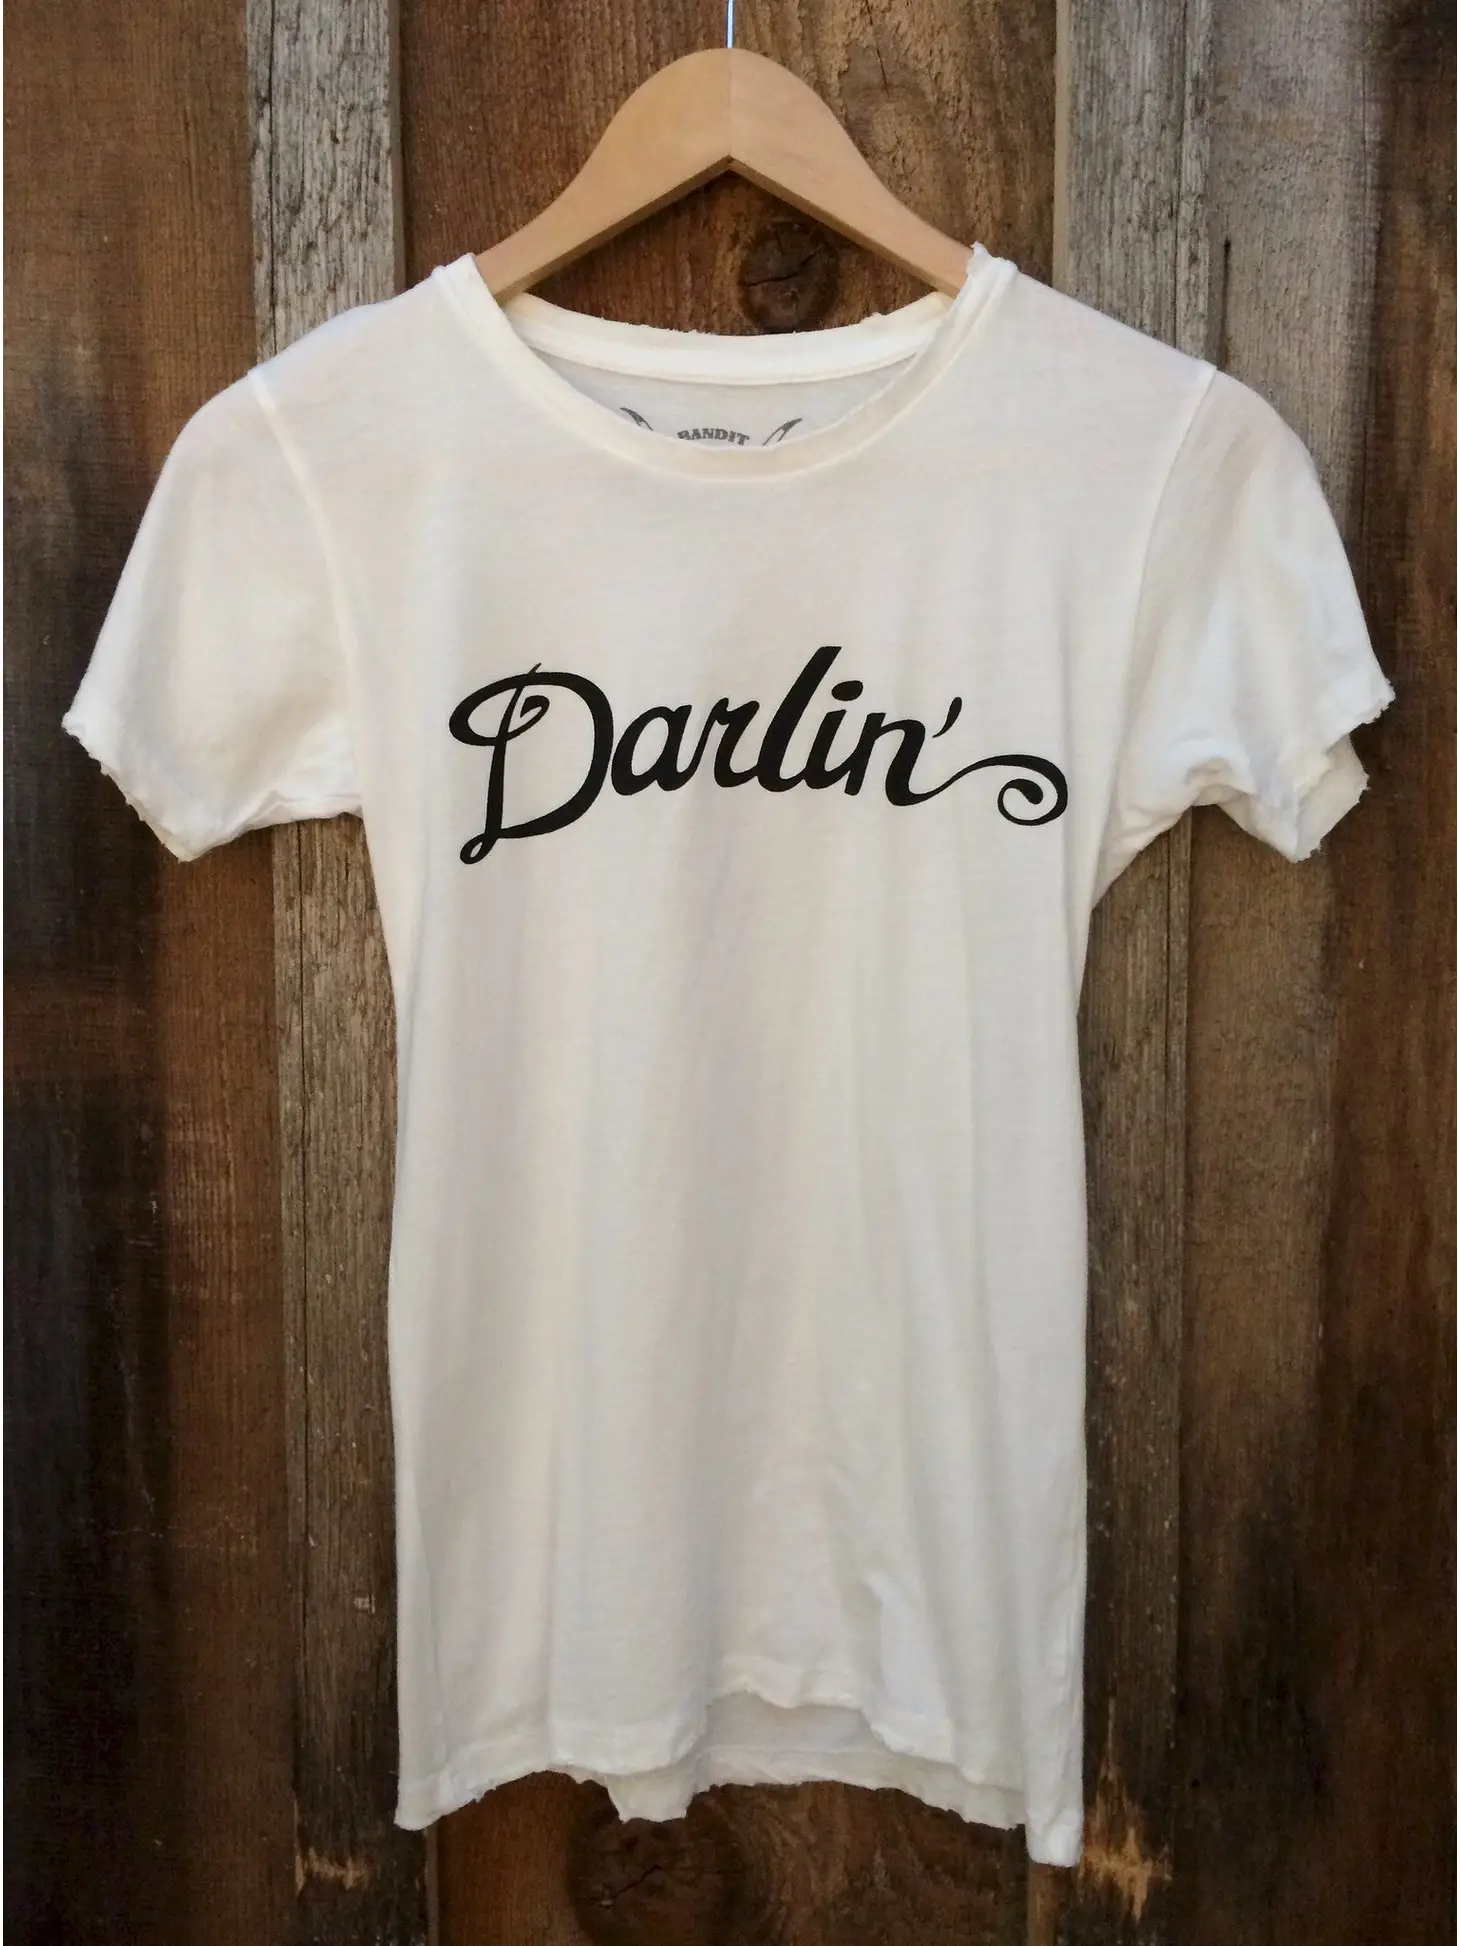 Darlin Women's Vintage Tee white and black